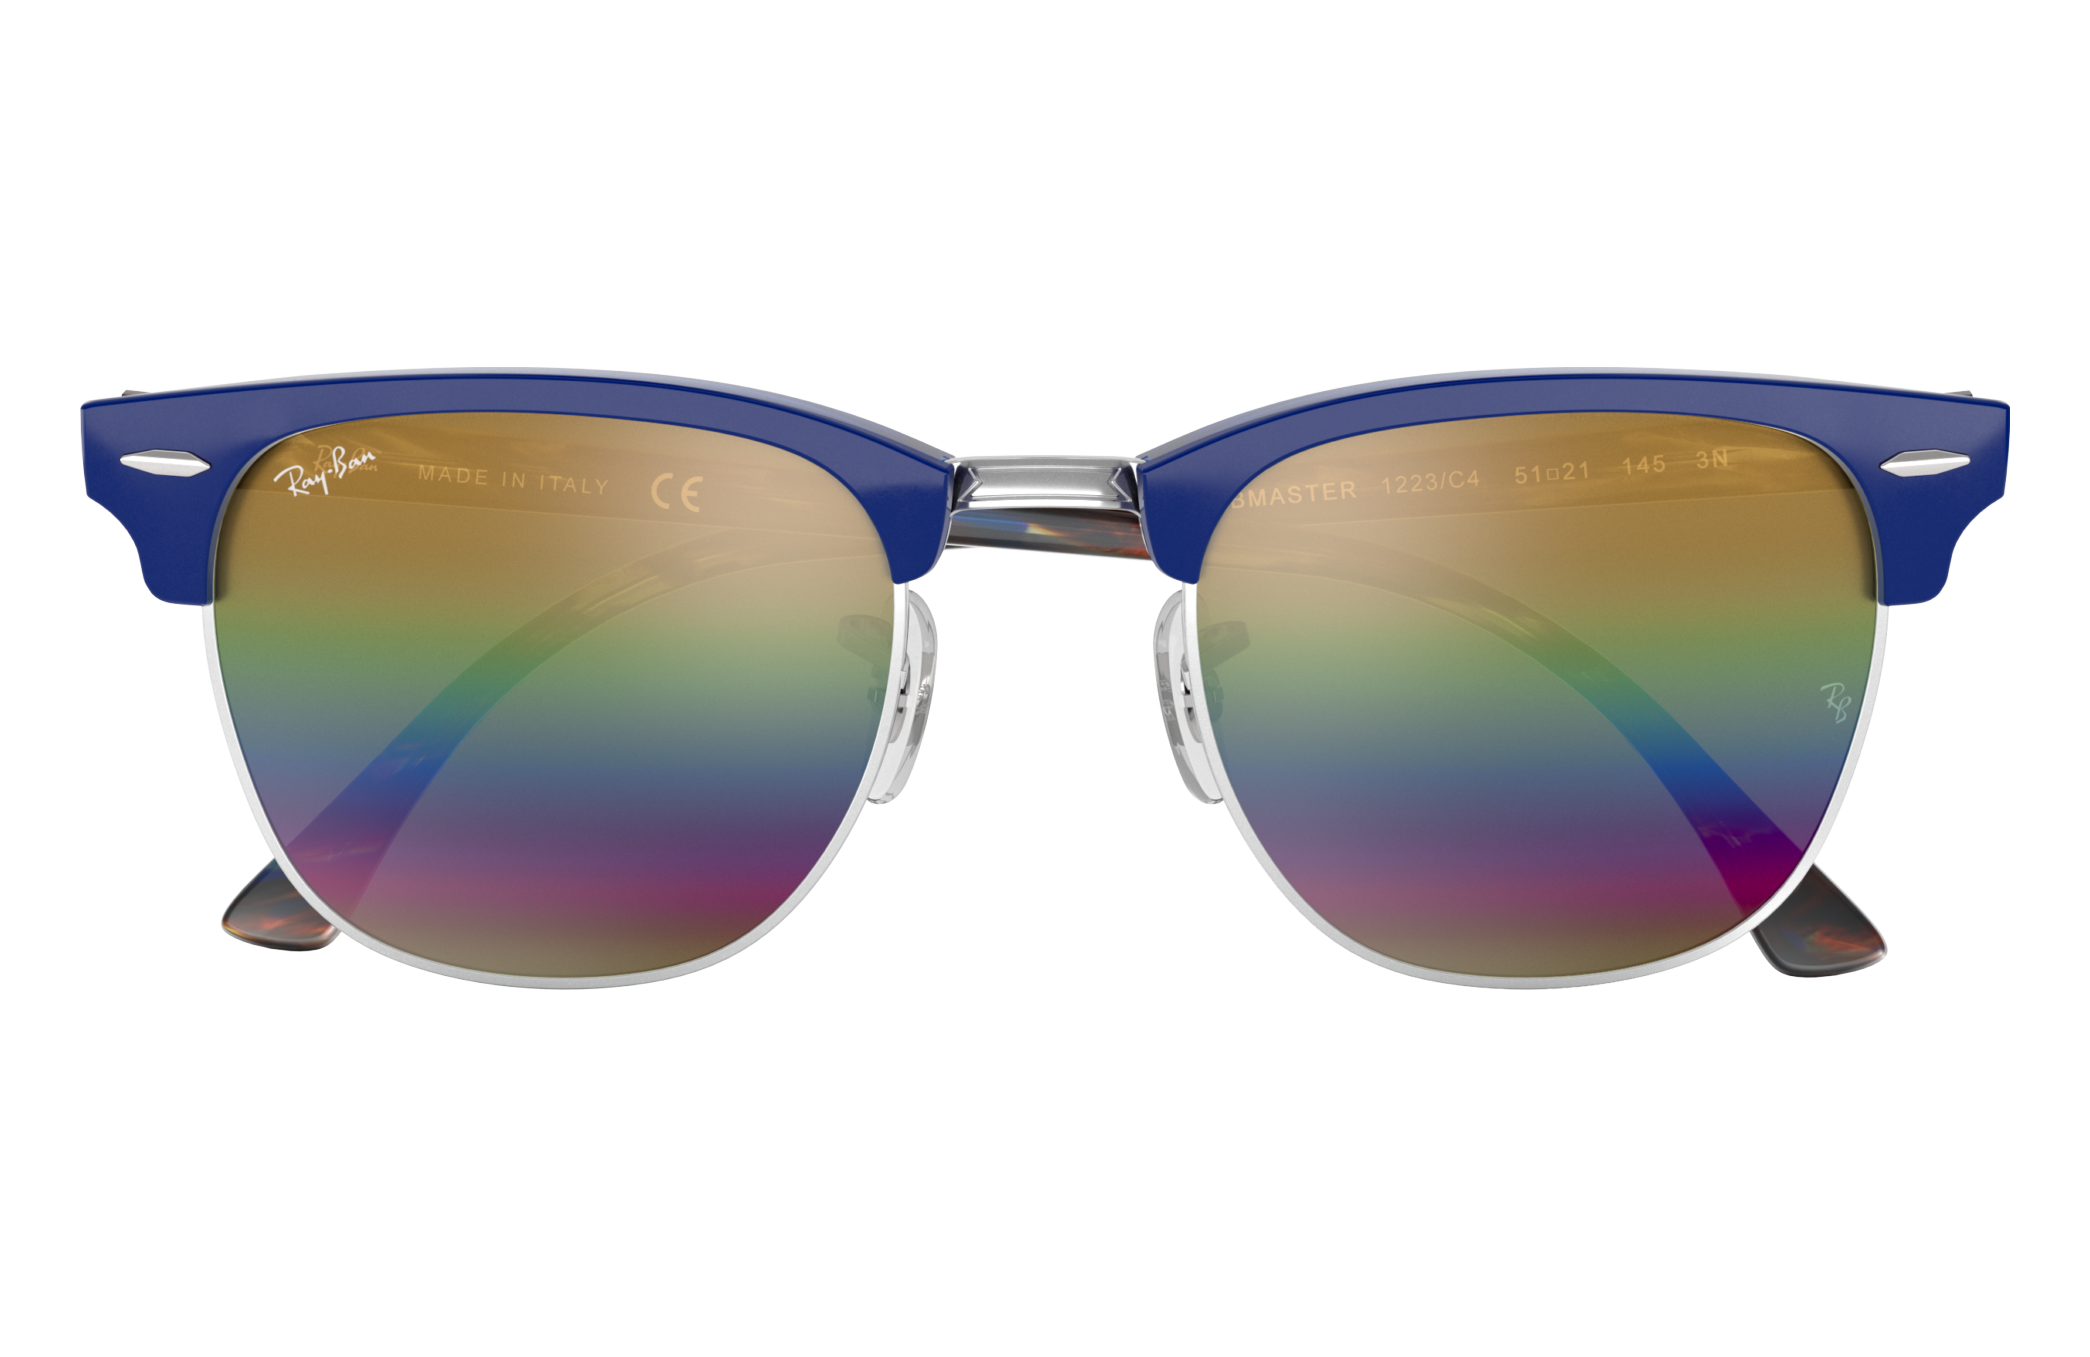 ray ban rainbow sunglasses